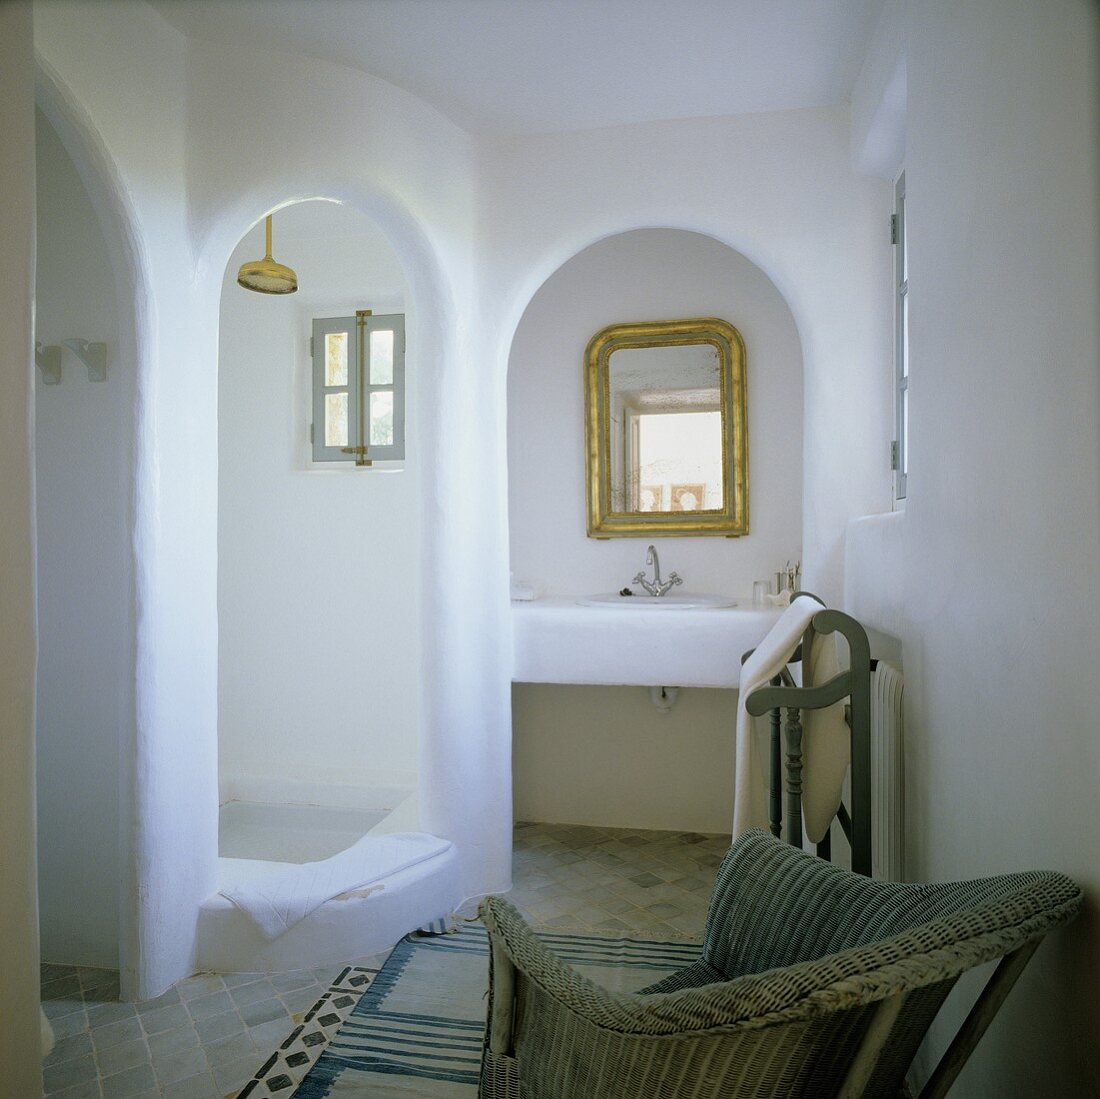 A Mediterranean bathroom with stone niches and archways